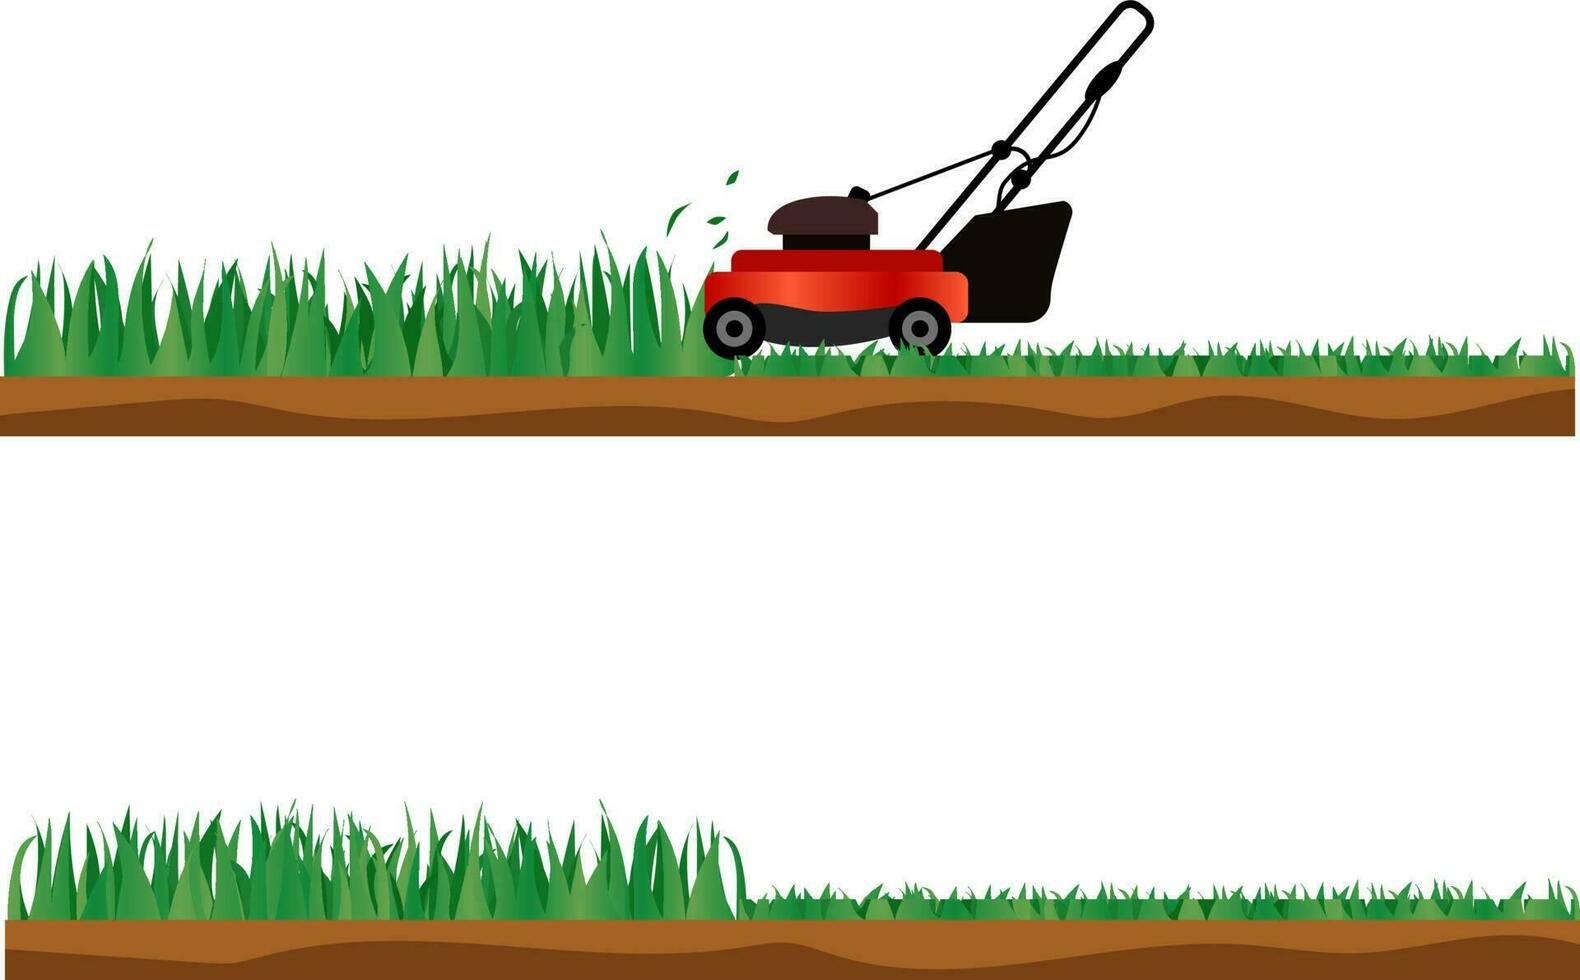 Lawn mower vector illustration, Lawn mower cuts green grass vector illustration.